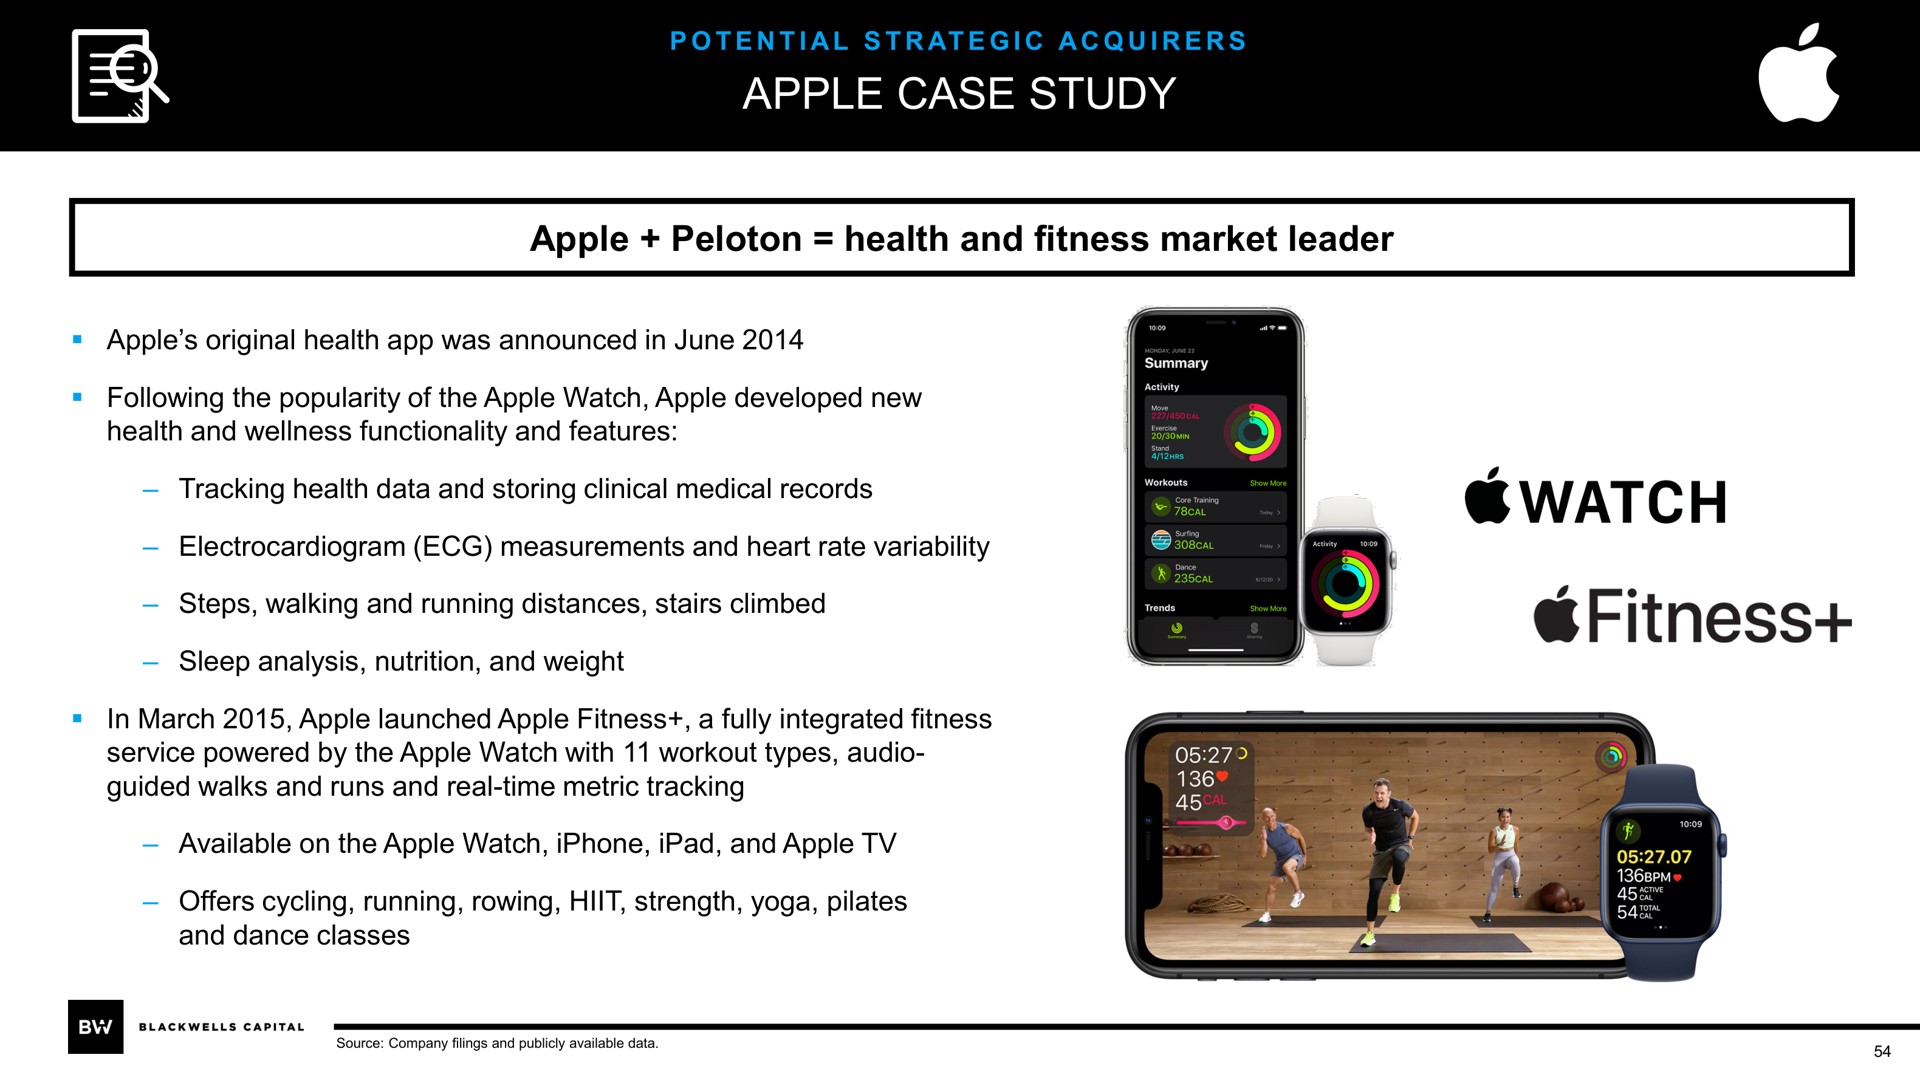 apple case study apple peloton health and fitness market leader | Blackwells Capital